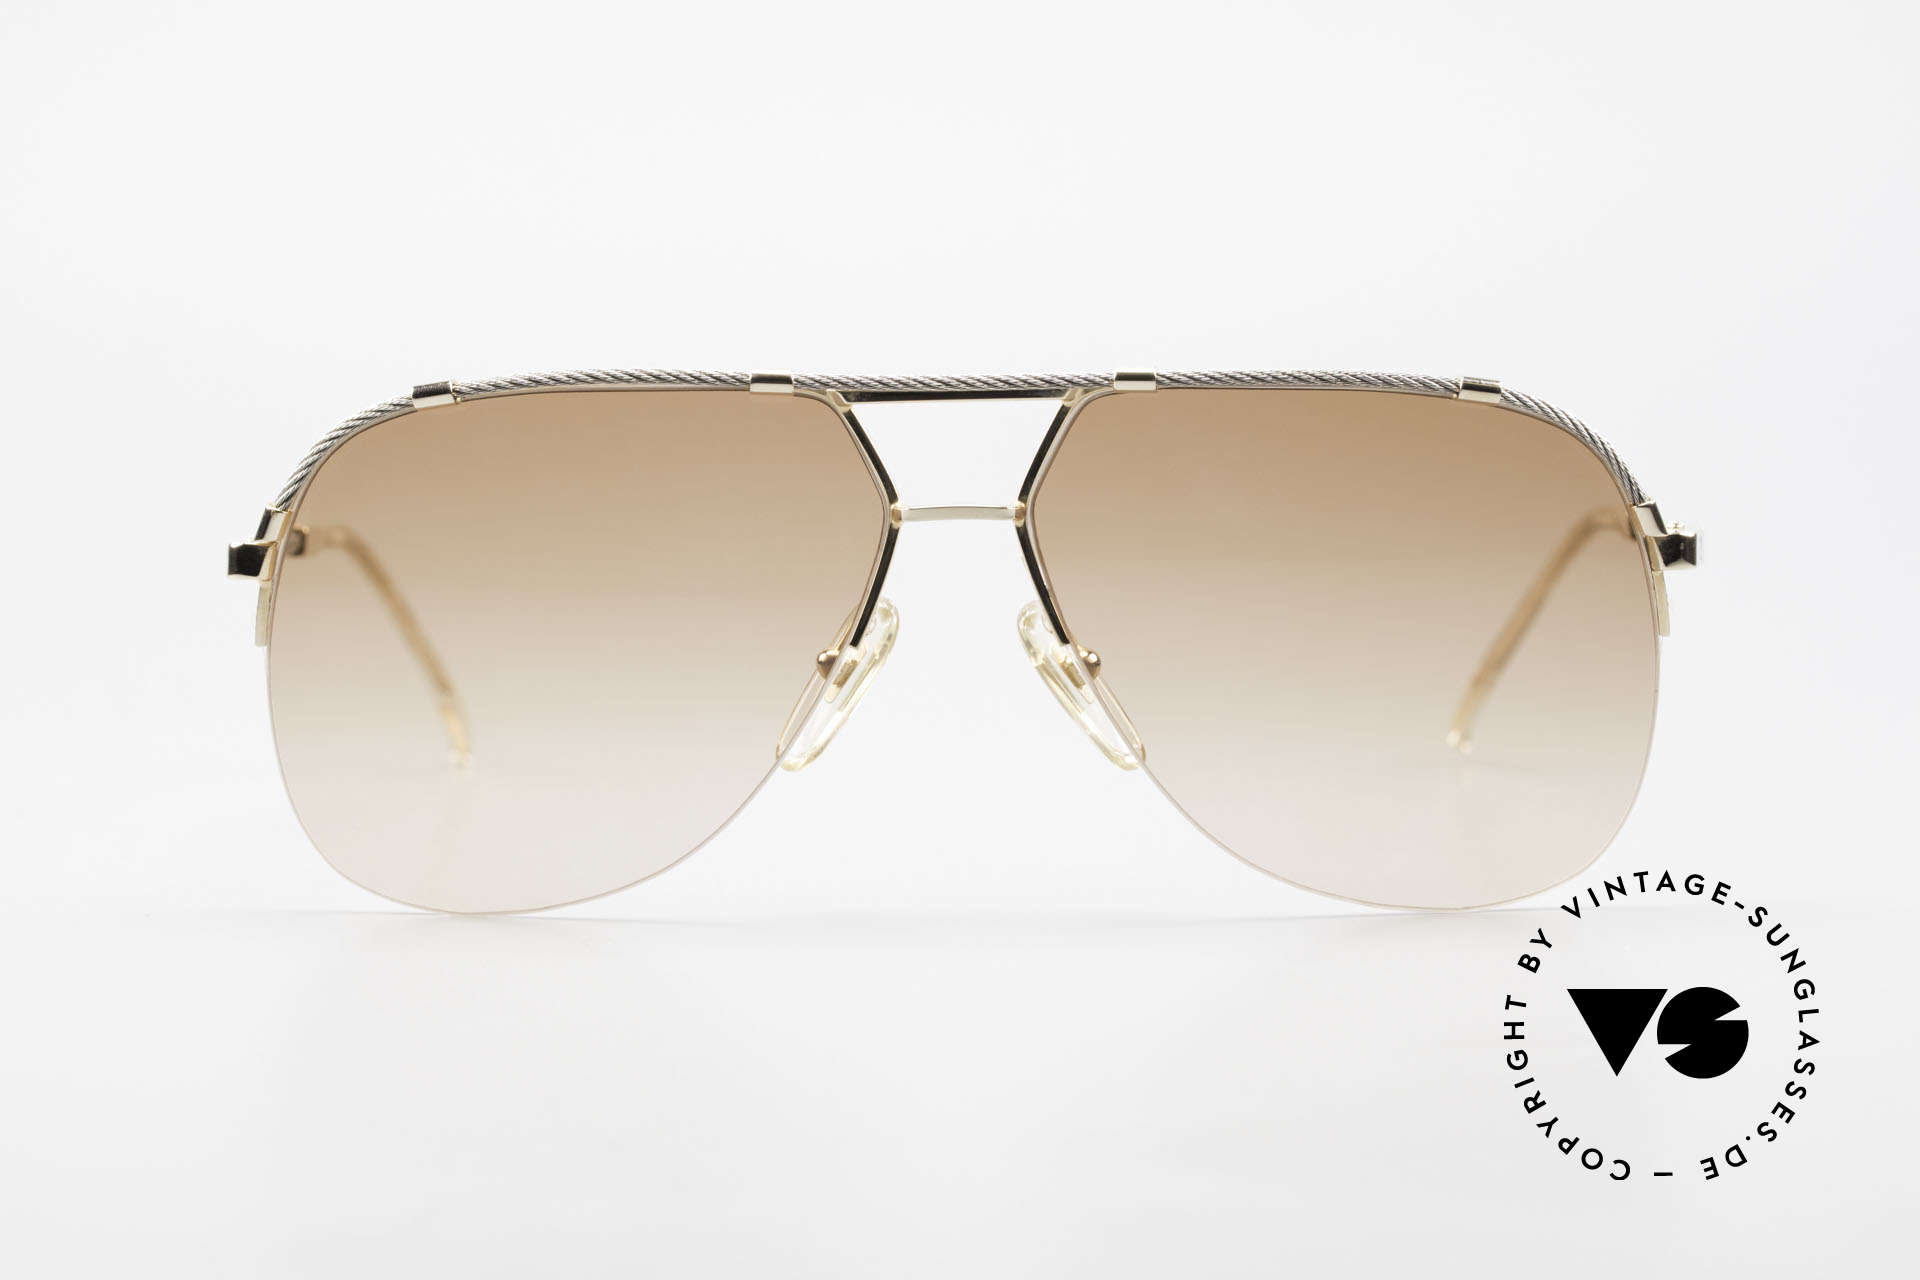 Sunglasses Pierre Cardin CP806 Vintage Sailing 80's Frame